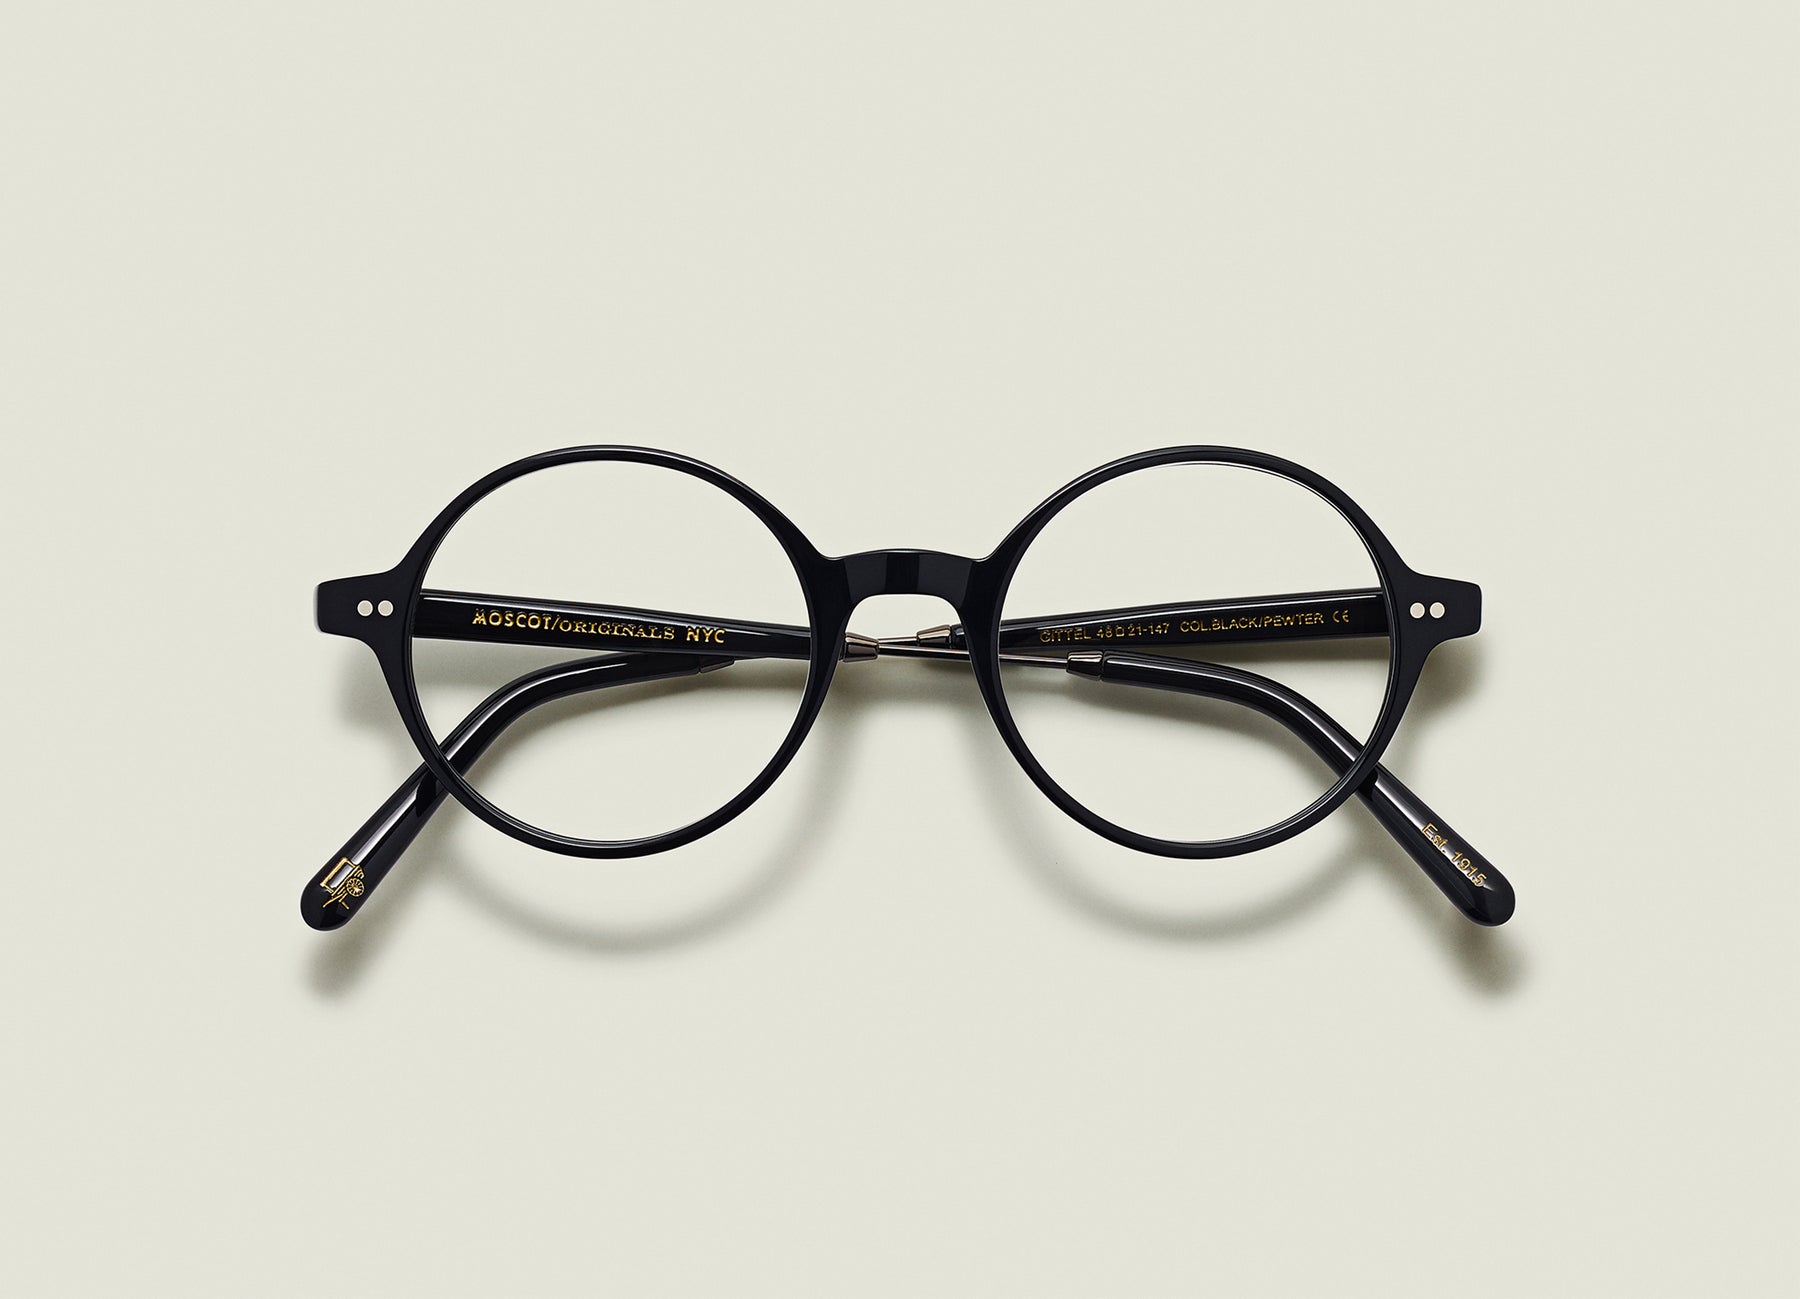 Buy Amazing Grandad Glasses Case for GBP 1.50